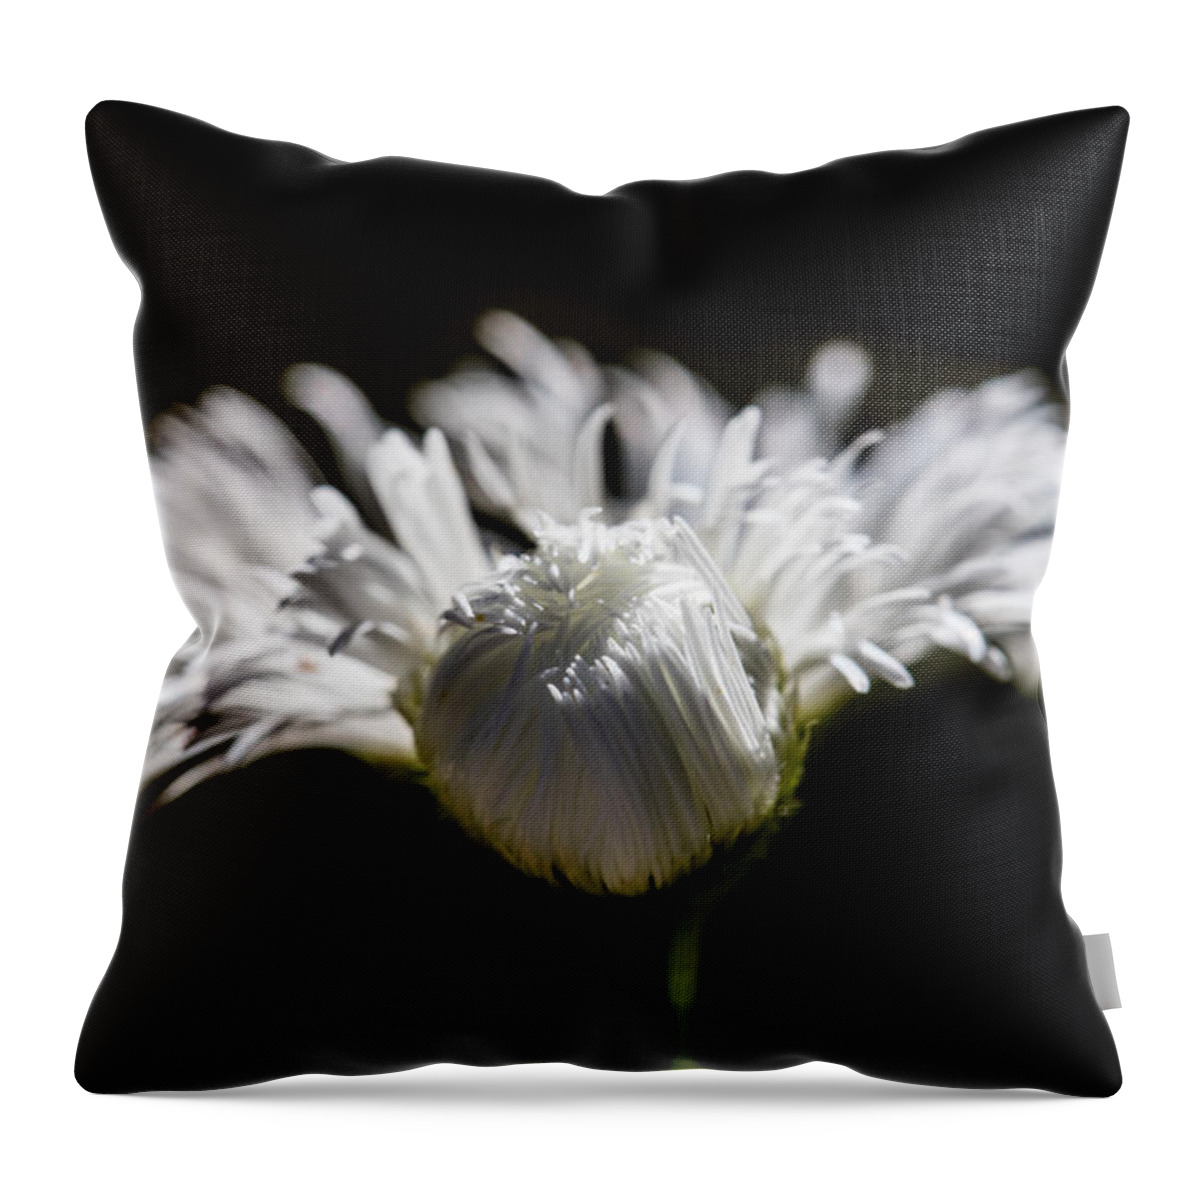 Chiaroscuro Throw Pillow featuring the photograph Floral Chiaroscuro by Steven Schwartzman